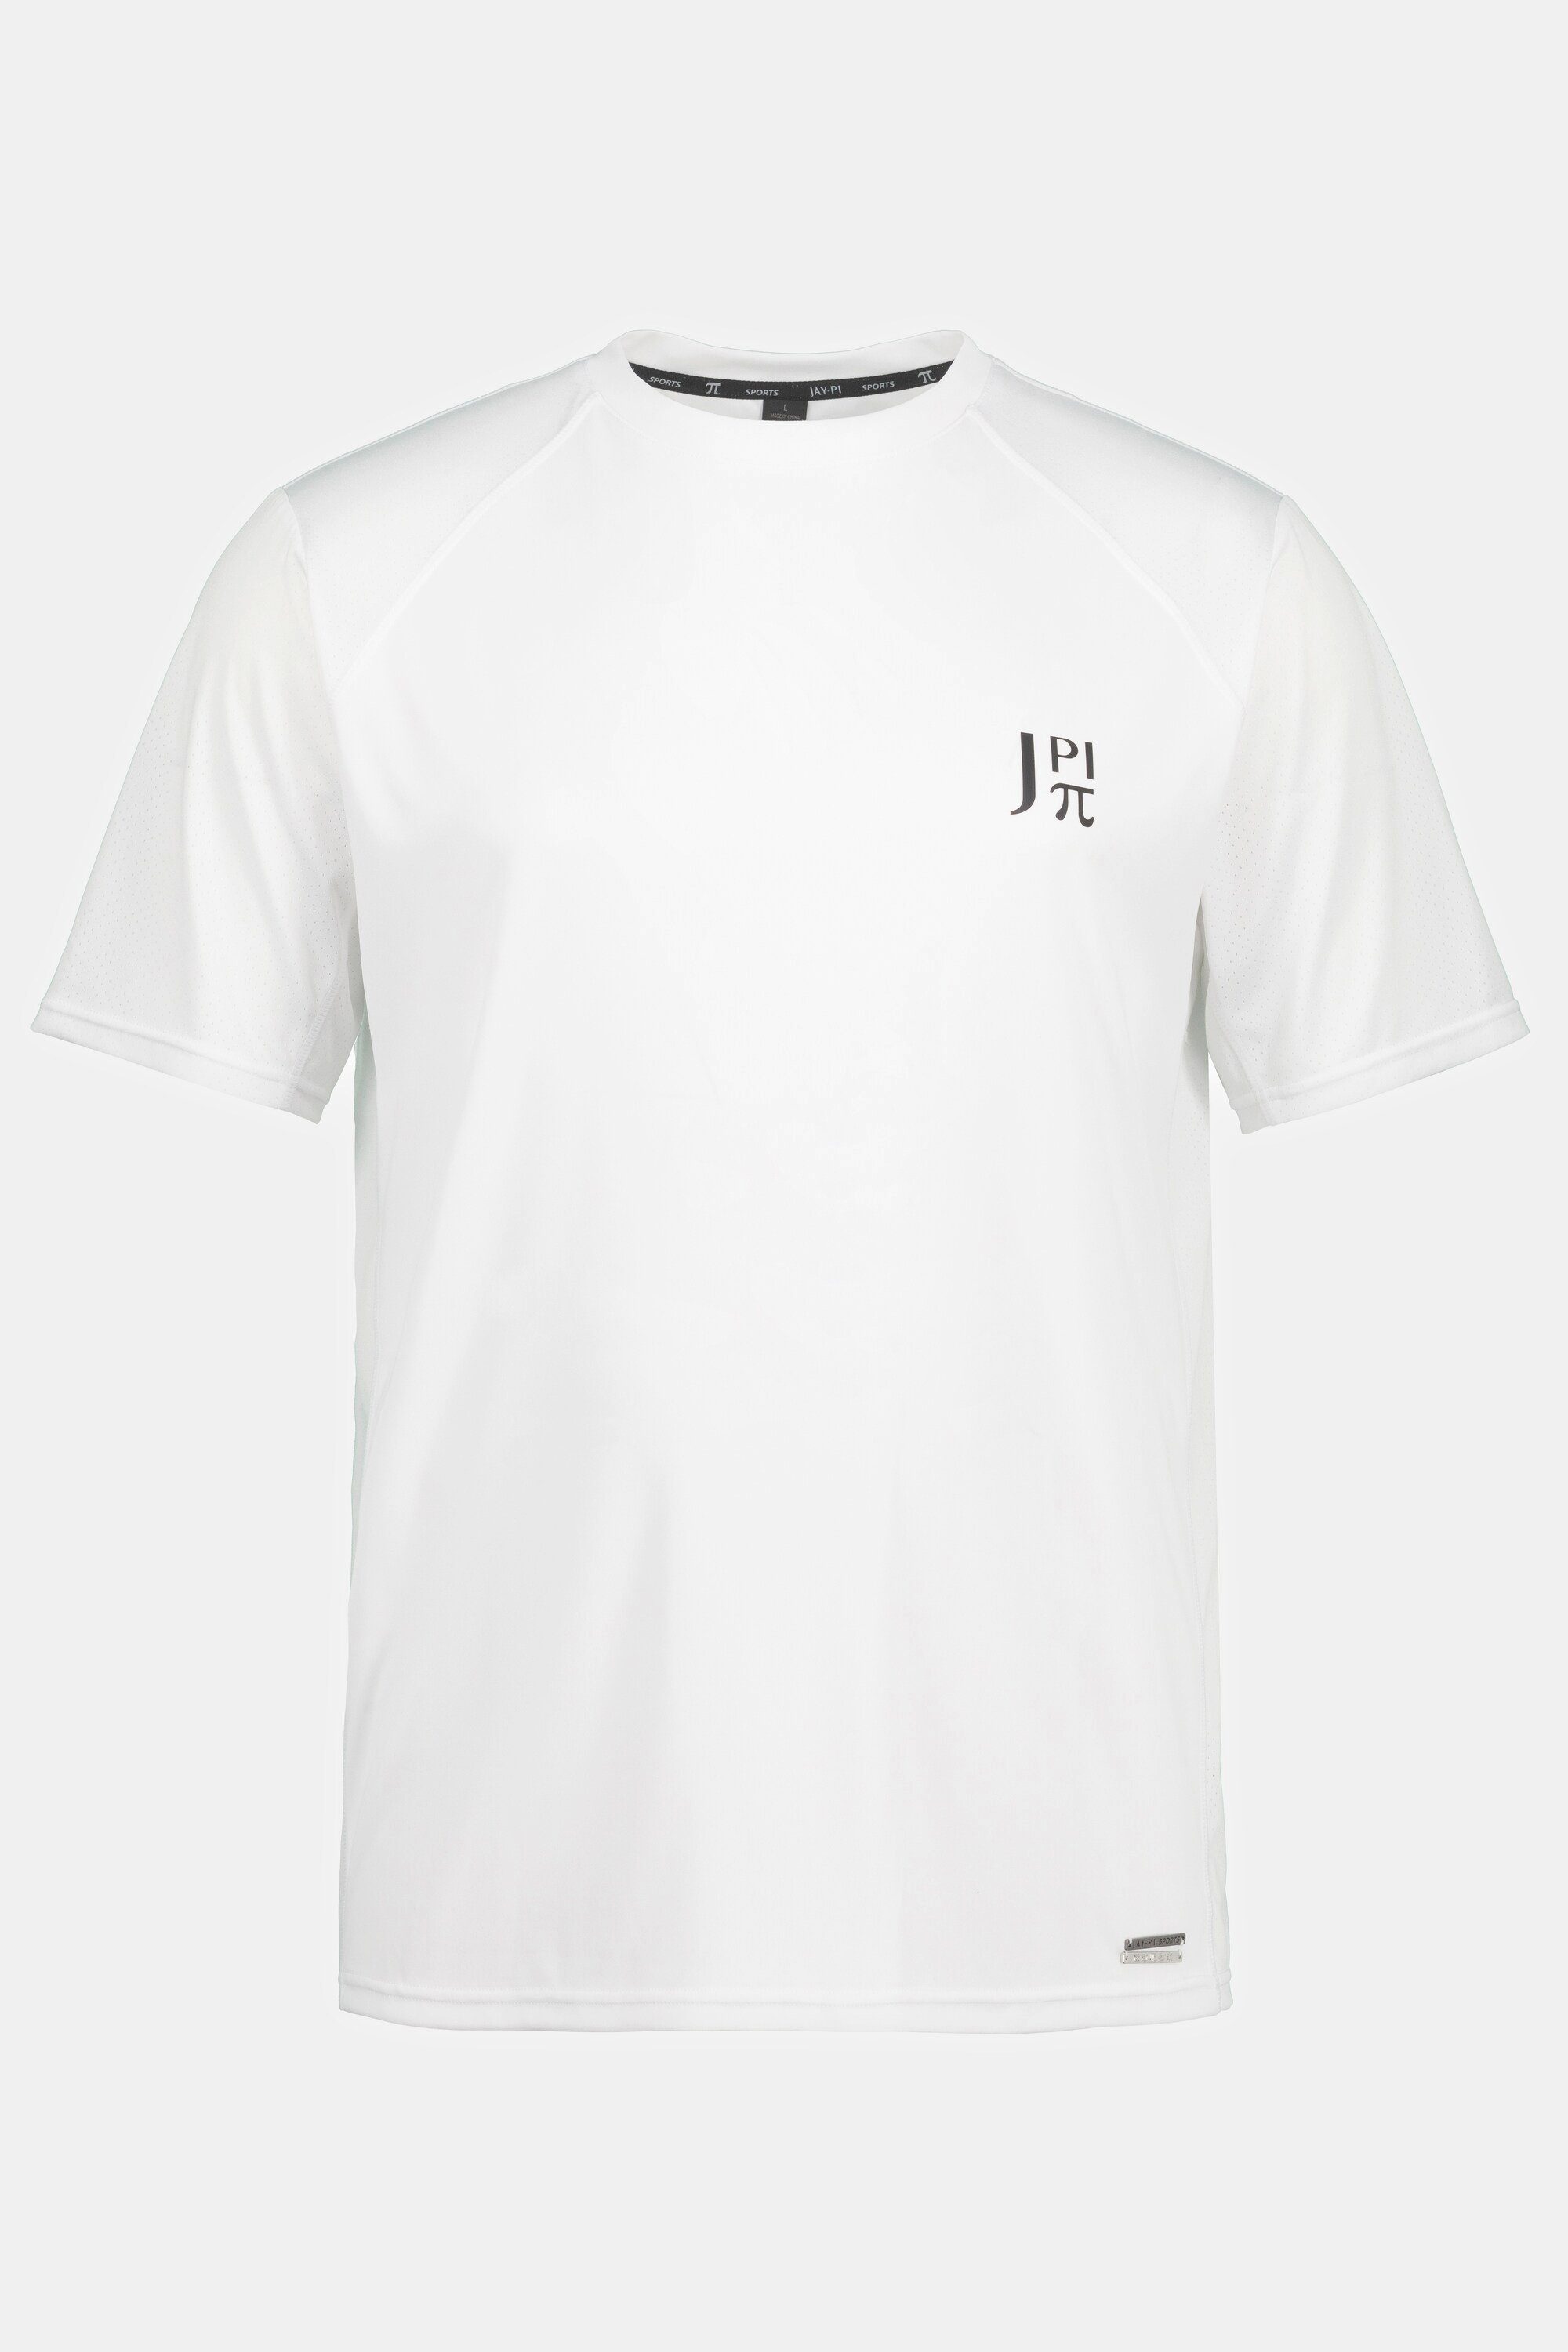 atmungsaktiv T-Shirt schneeweiß Funktions-Shirt Tennis Halbarm JP1880